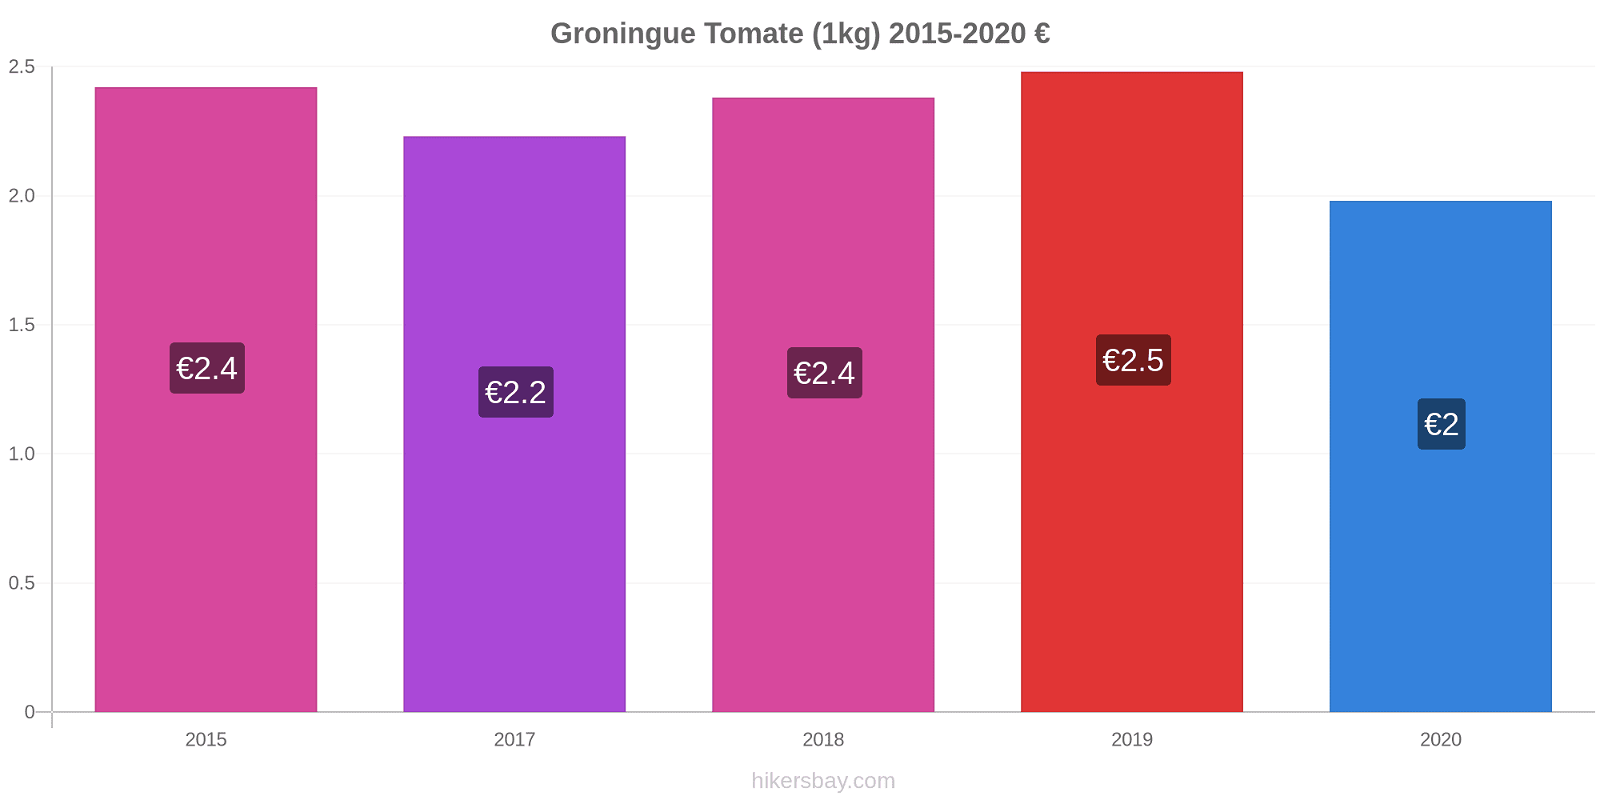 Groningue changements de prix Tomate (1kg) hikersbay.com